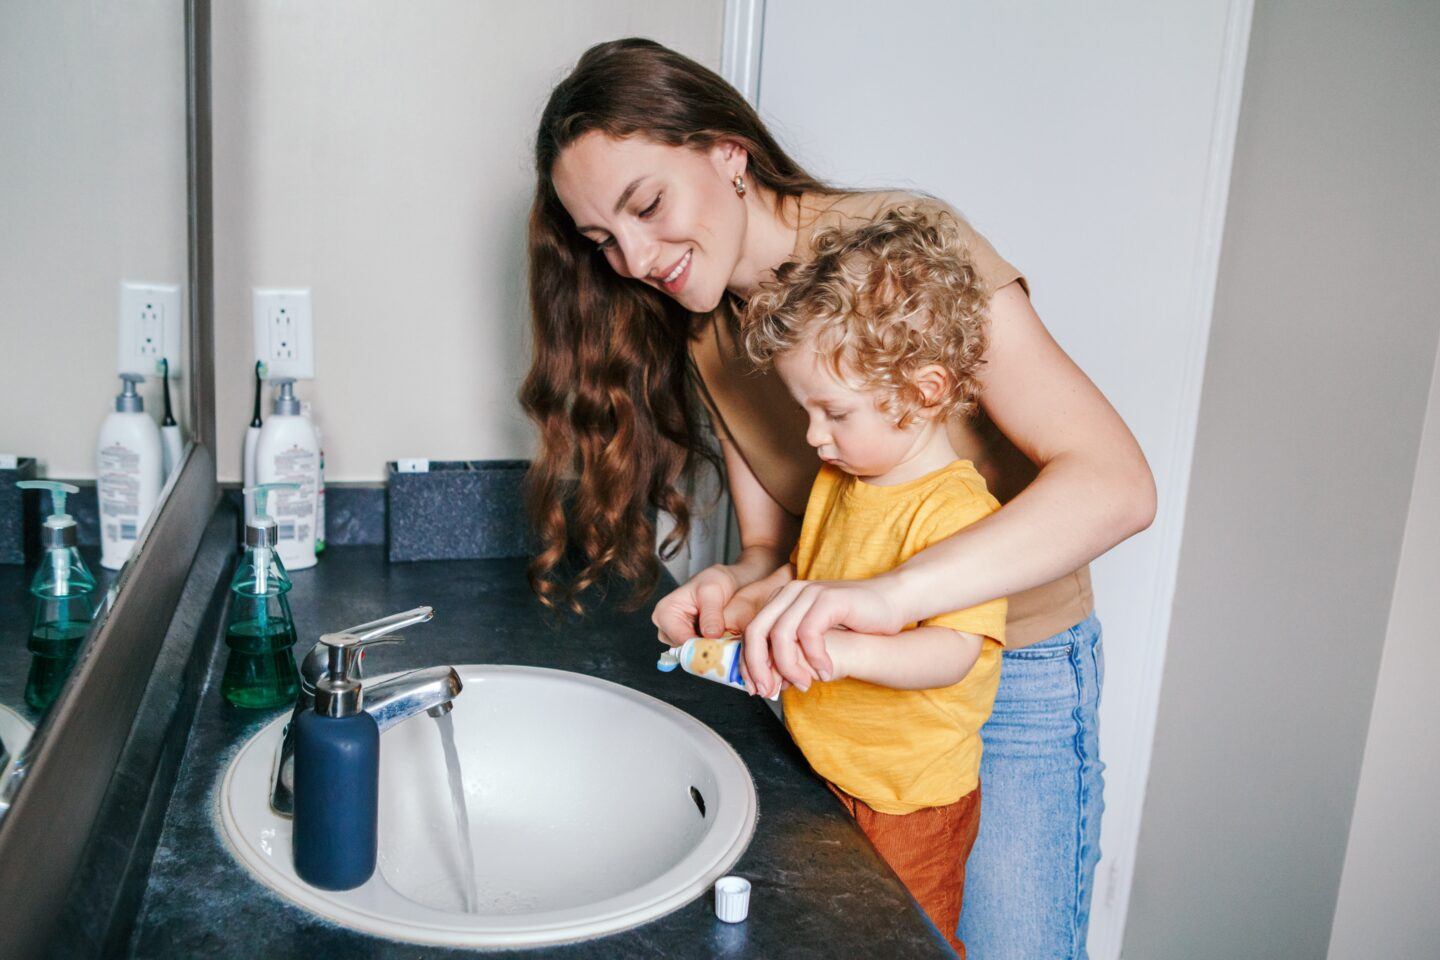 Toddler fights tooth brushing: mother helping toddler brush teeth at bathroom sink